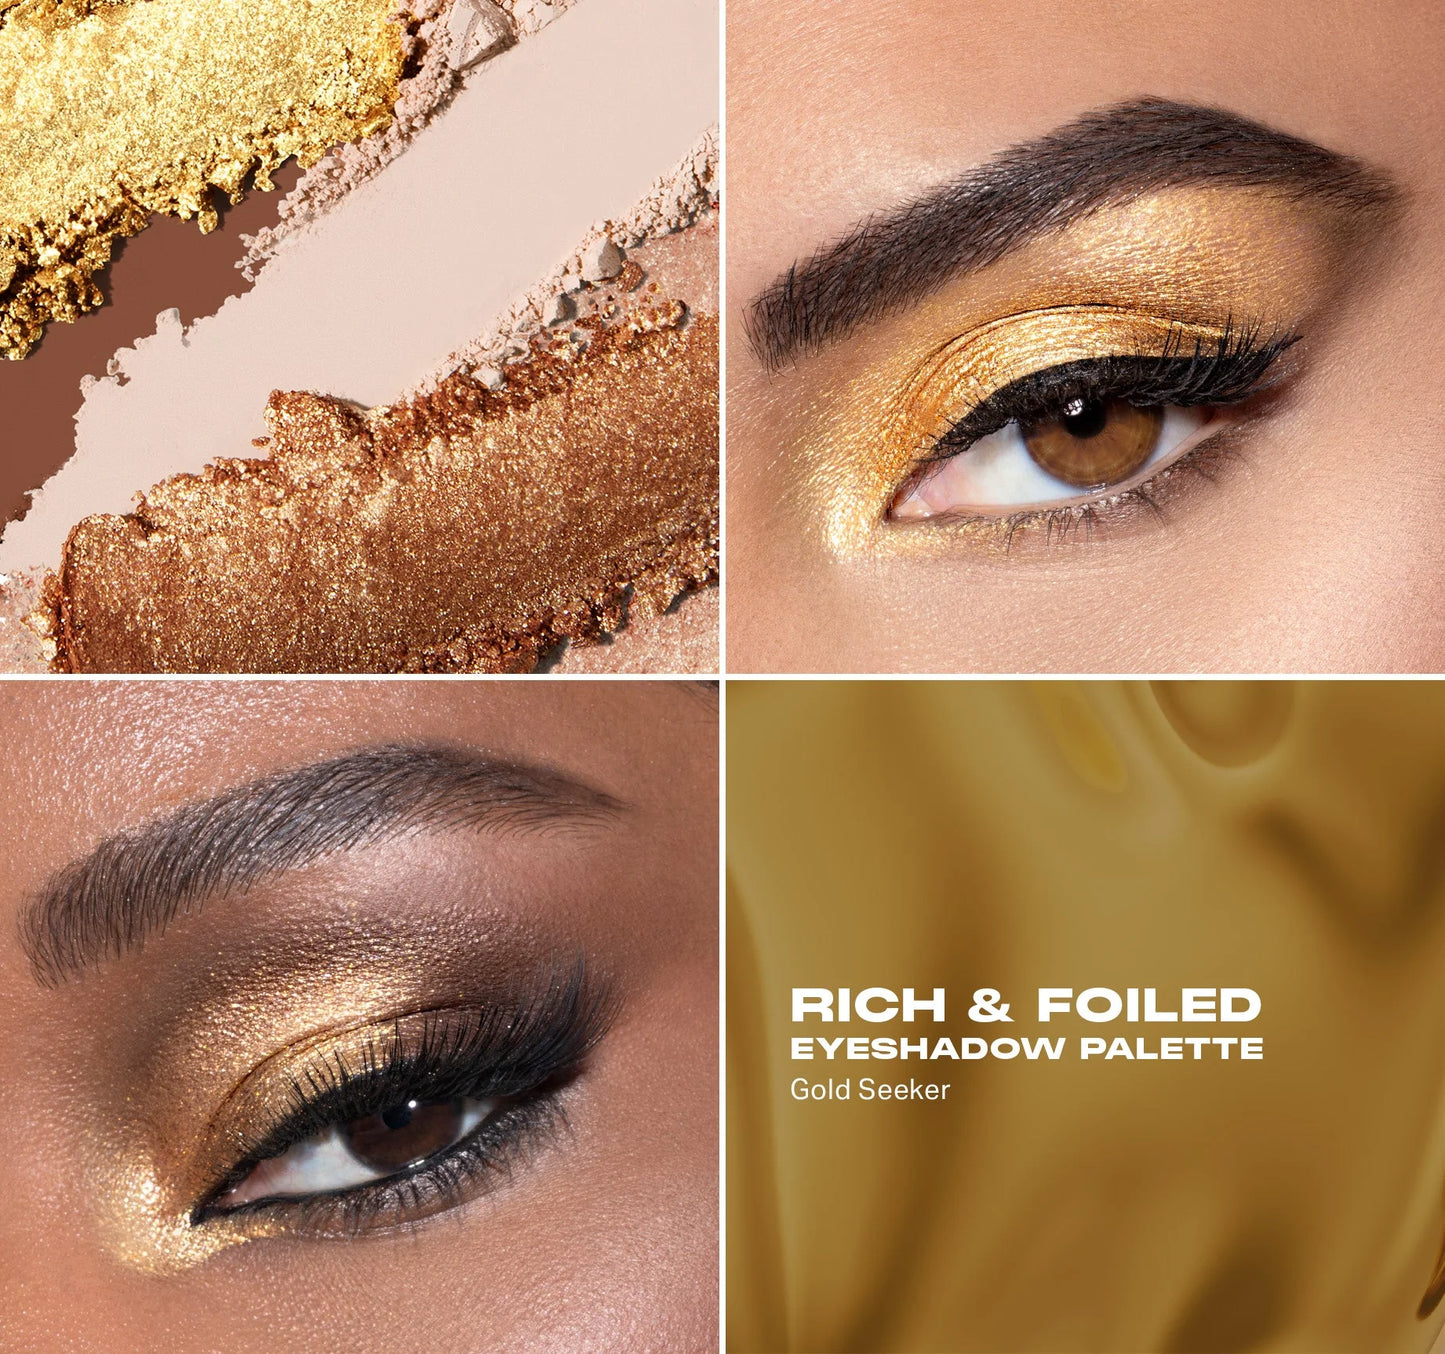 Rich & foiled artistry palette - Gold seeker Morphe